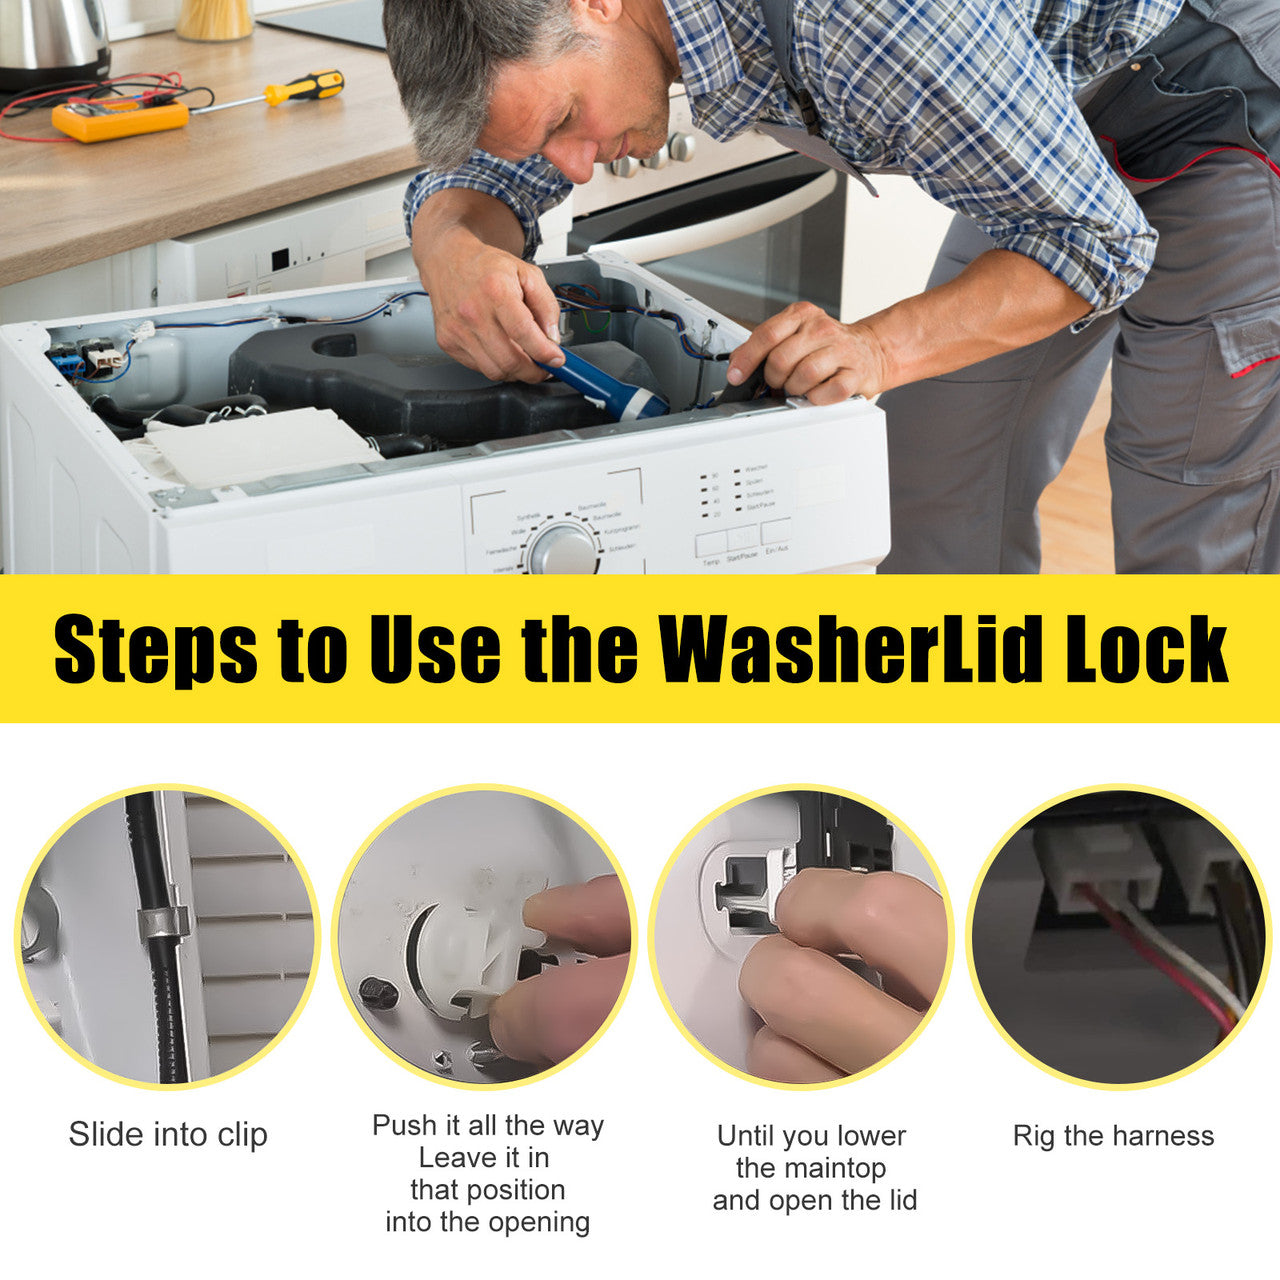 Washing Machine Lid Lock Switch W11307244 - For Whirlpool GE